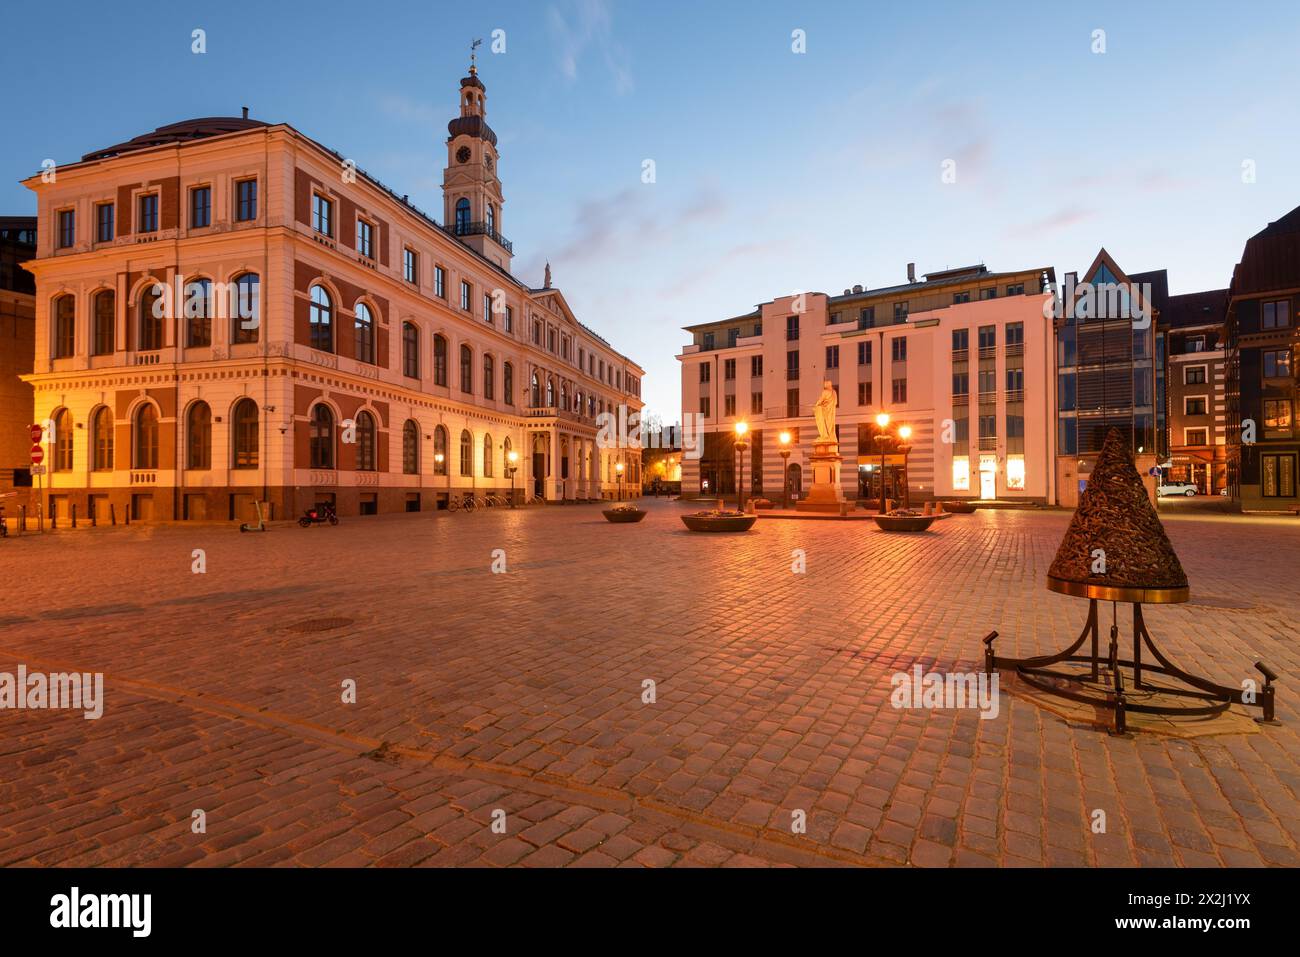 Historic Town Hall, Town Hall Square, Rathausplatz at dawn, Riga, Latvia Stock Photo